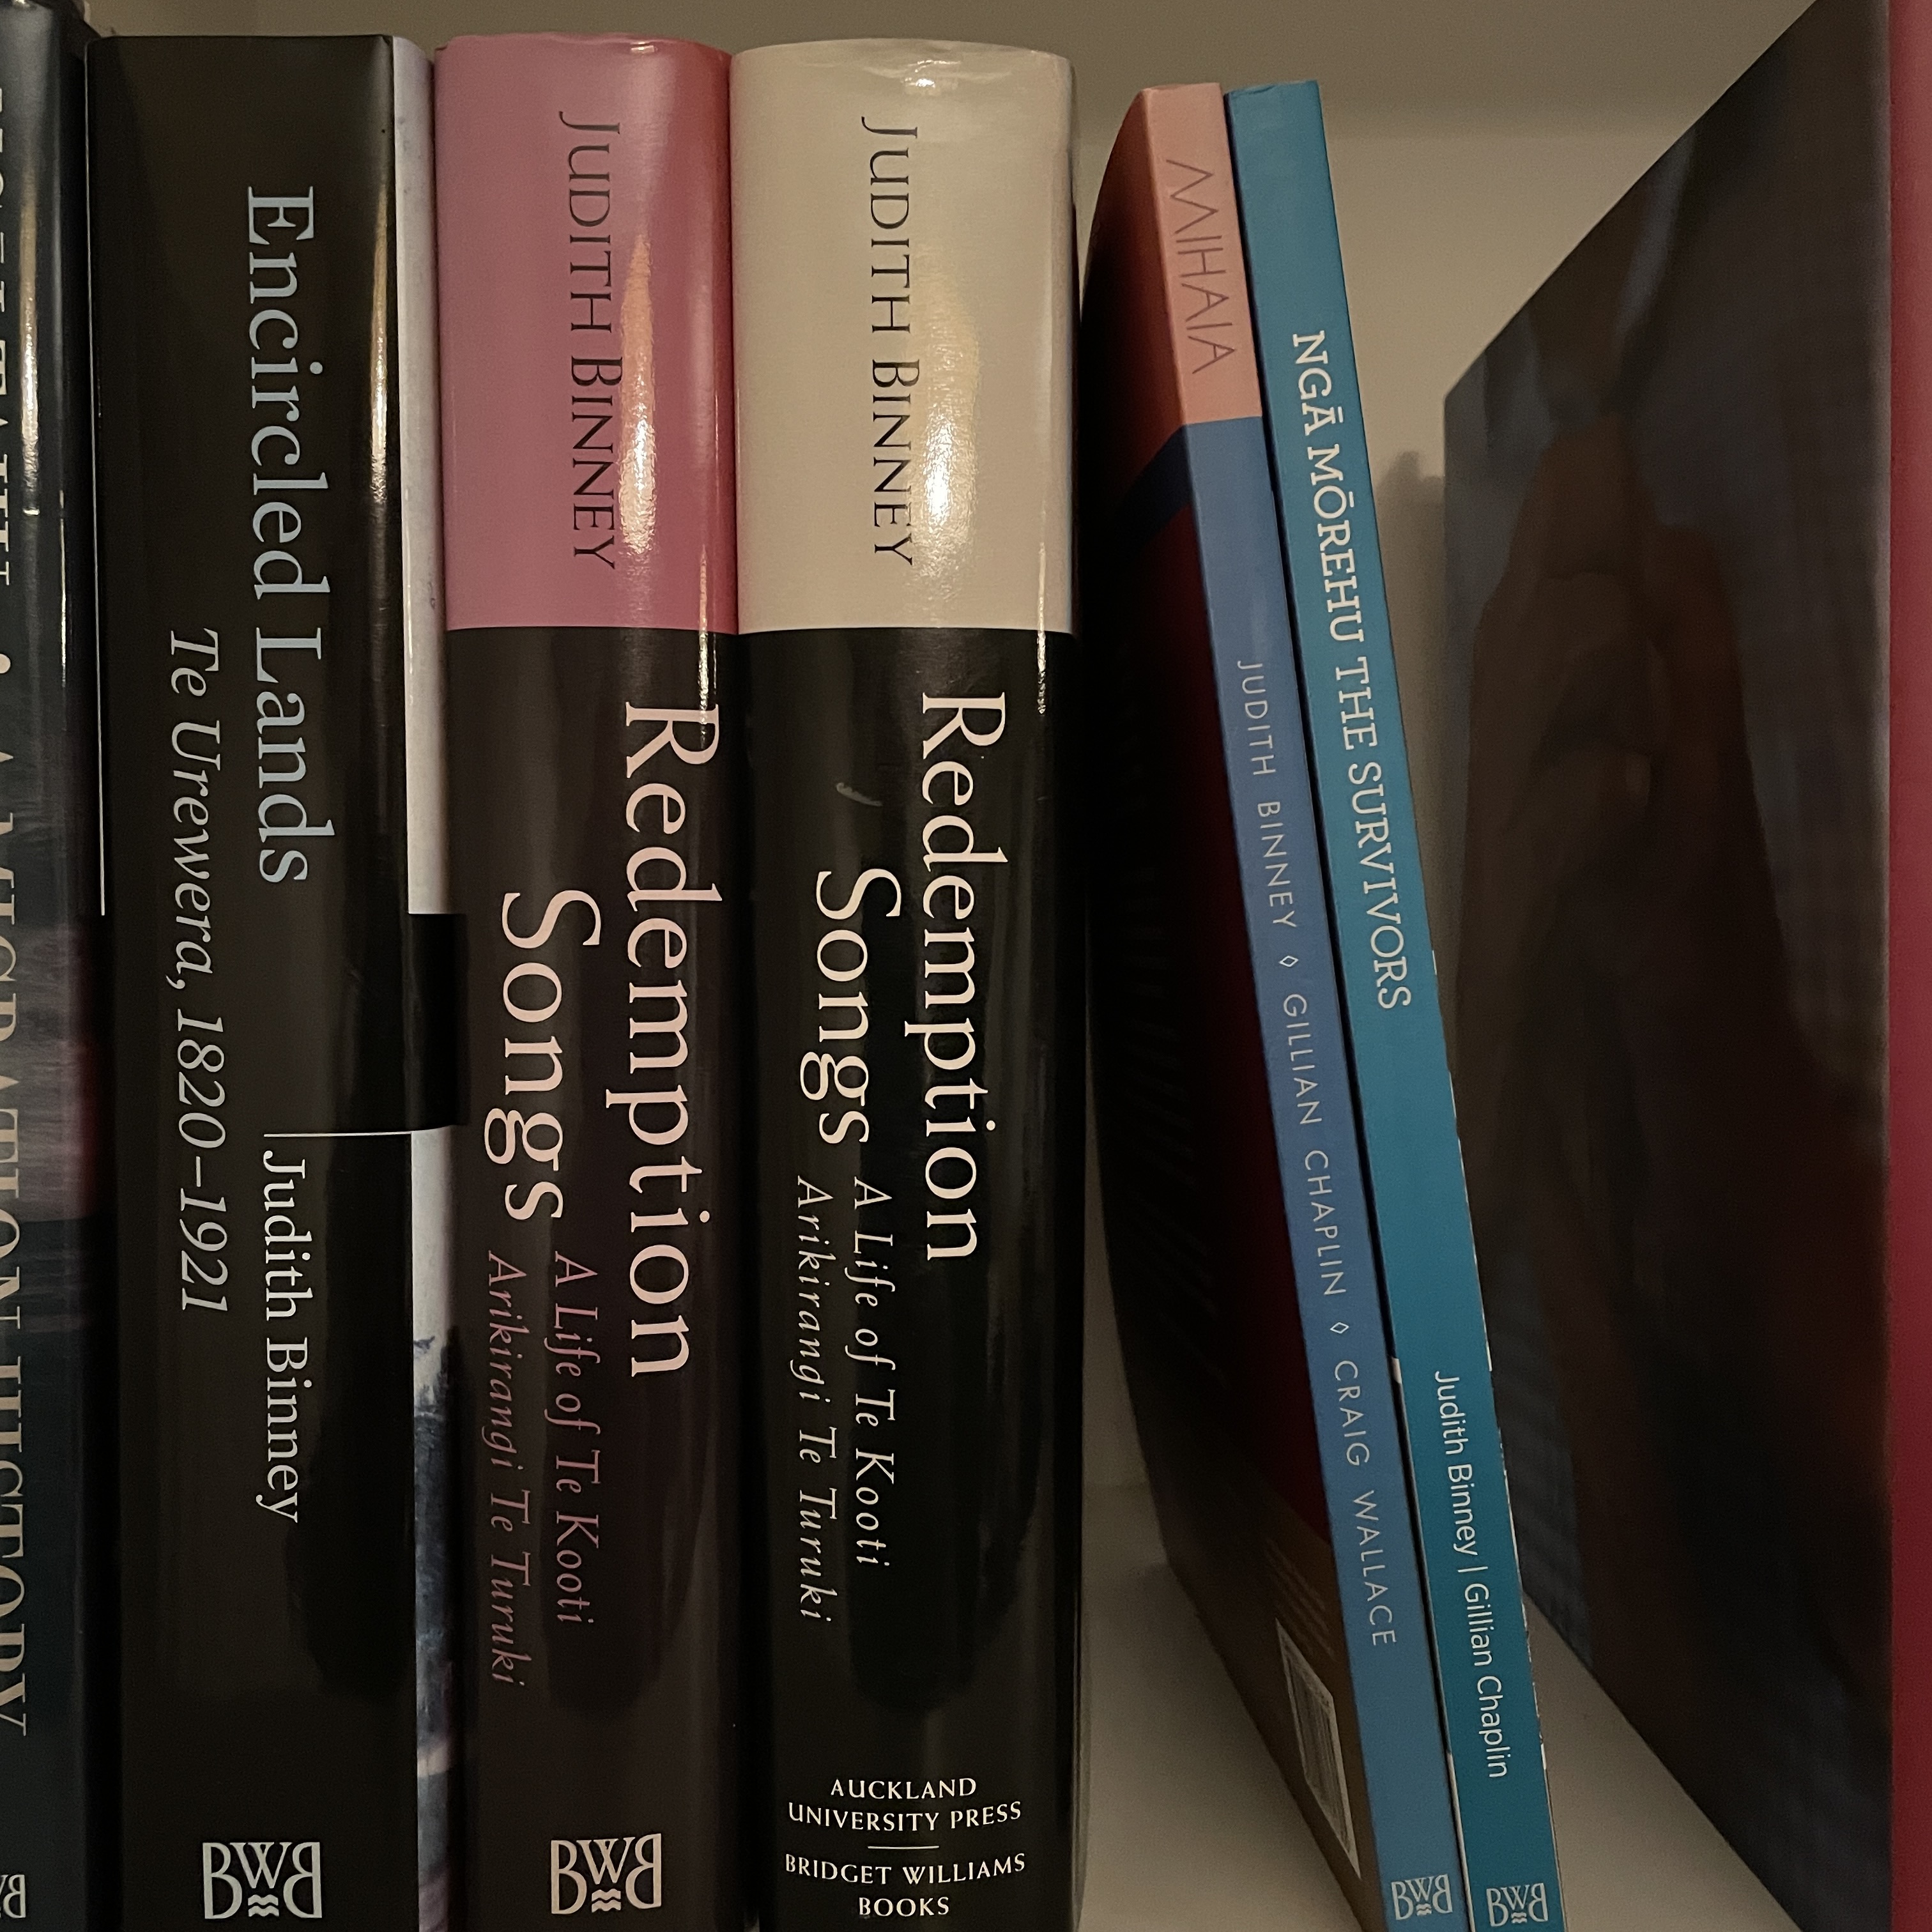 Some of Judith Binney's publications standing on bookshelf